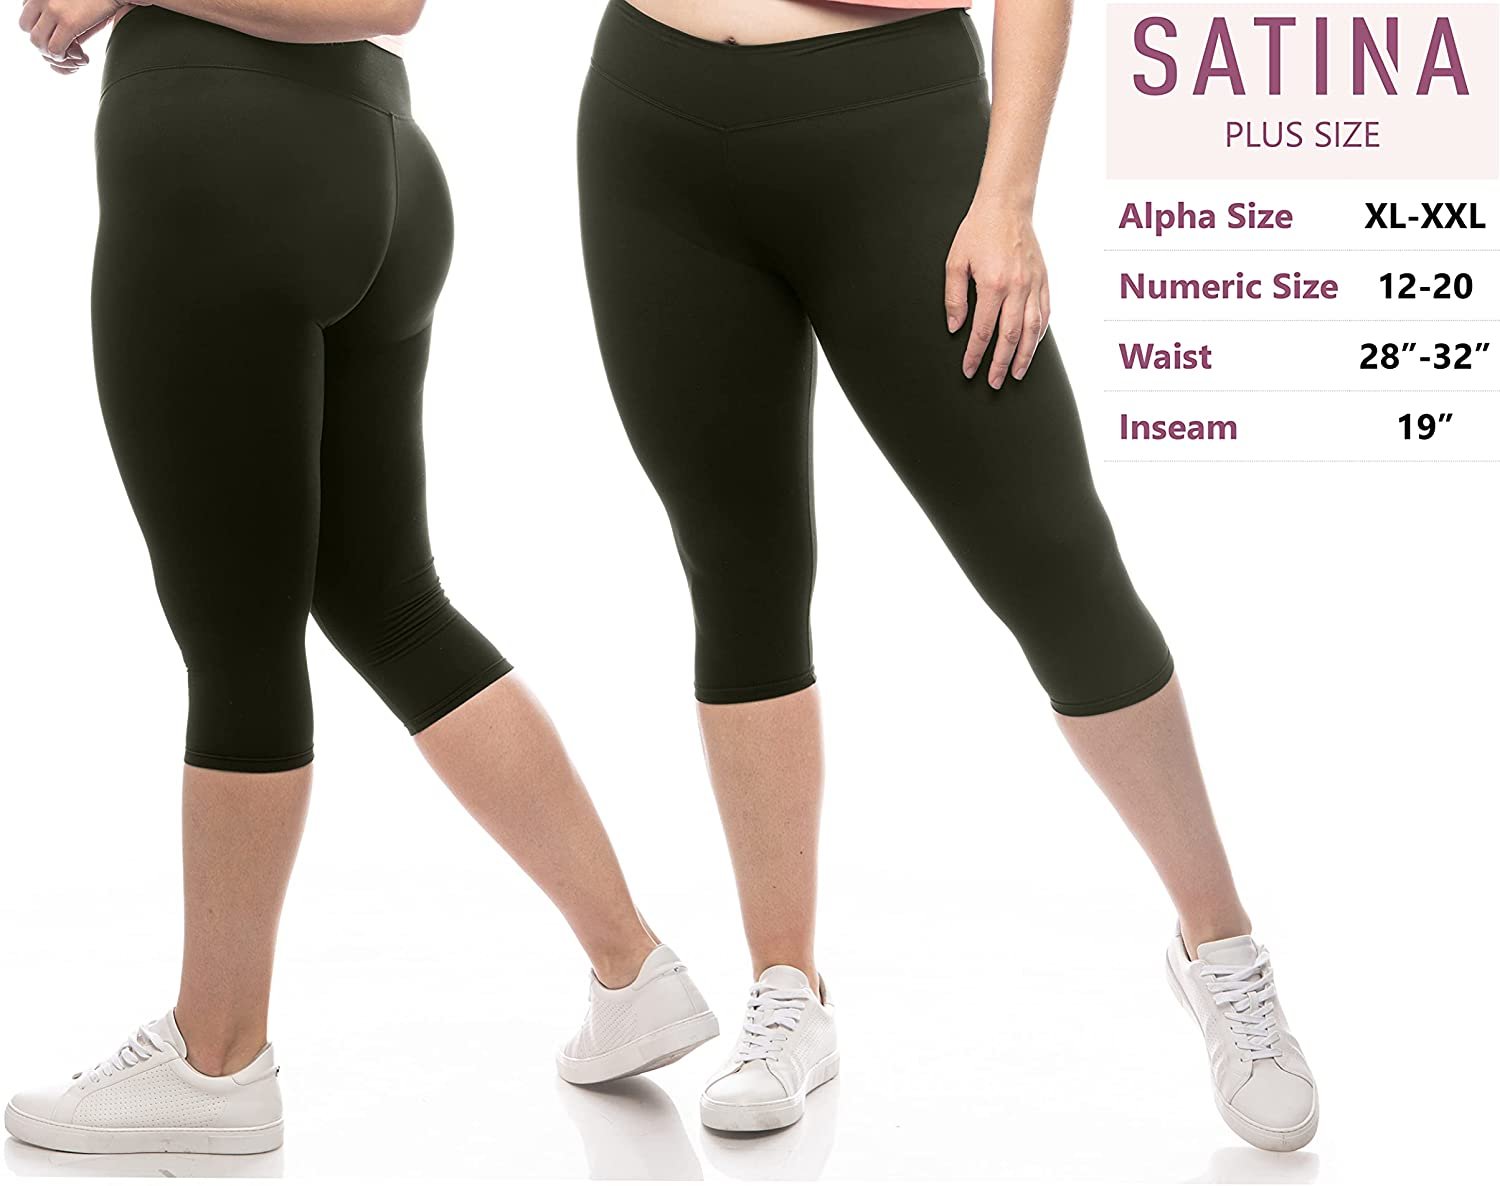 SATINA Capri High Waisted Leggings for Women | 3 Inch Waistband (Plus Size, Olive)